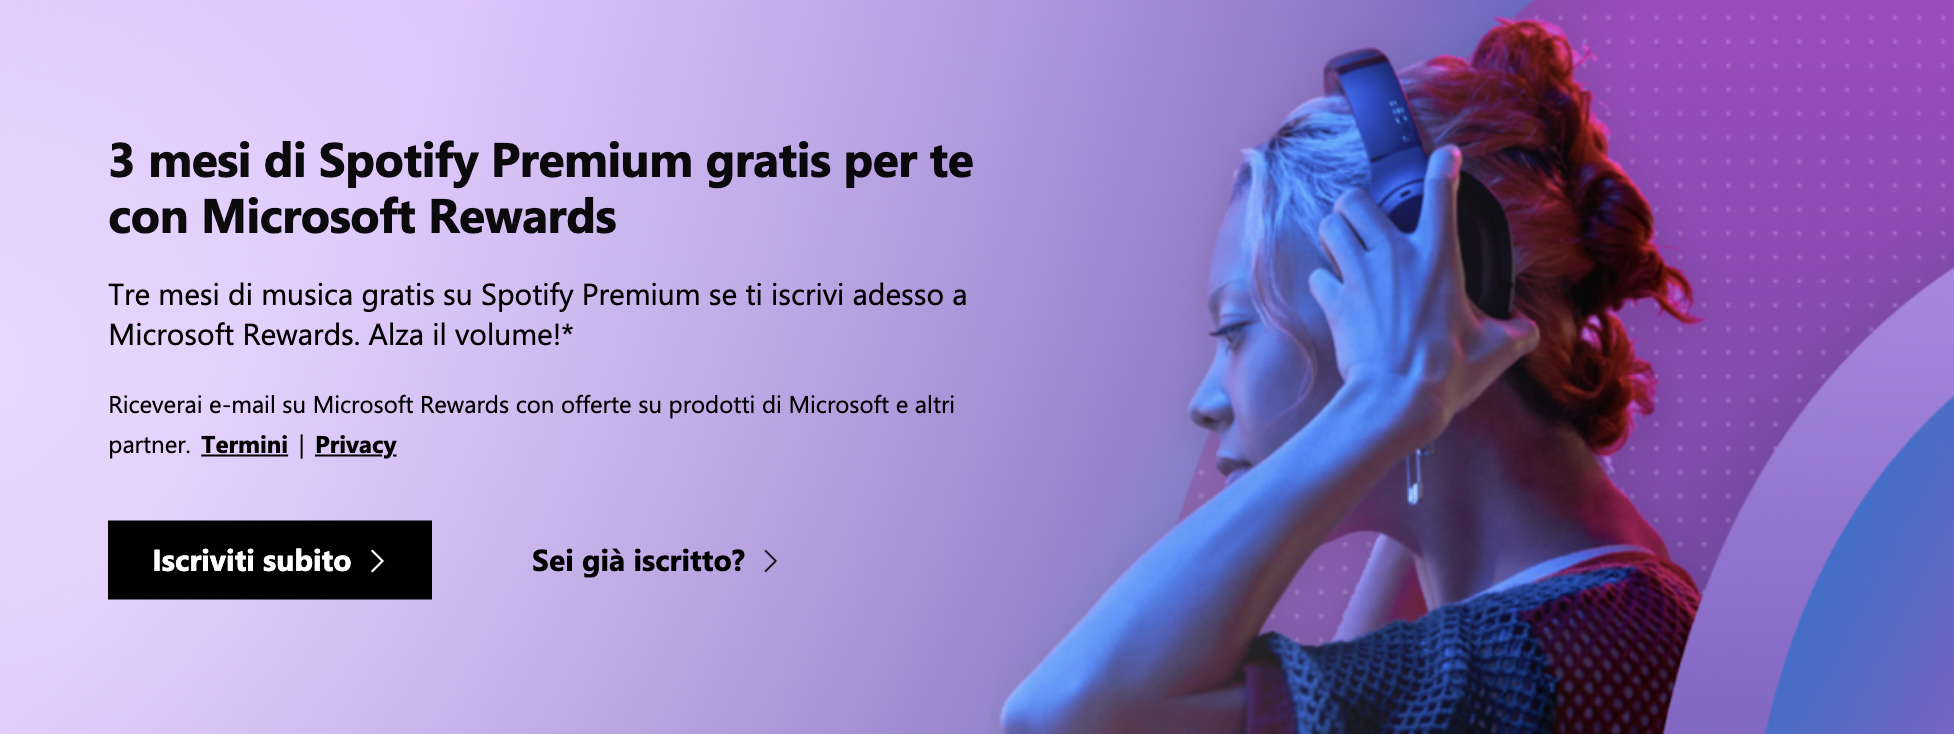 microsoft rewards promozione spotify premium